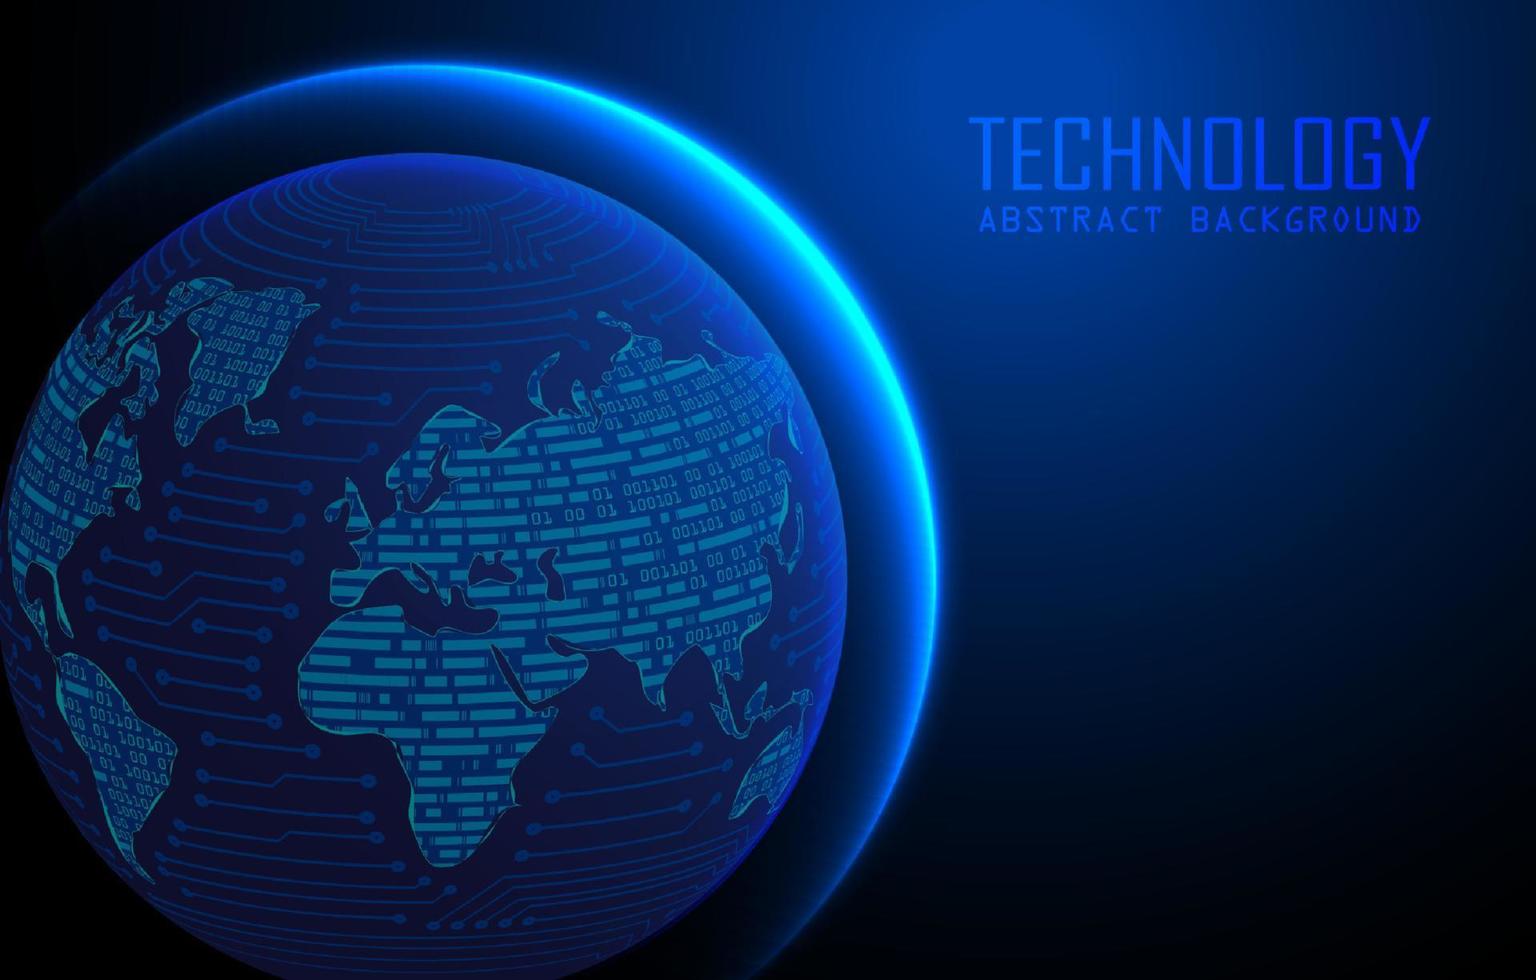 modern wereld kaart holograaf Aan technologie achtergrond vector